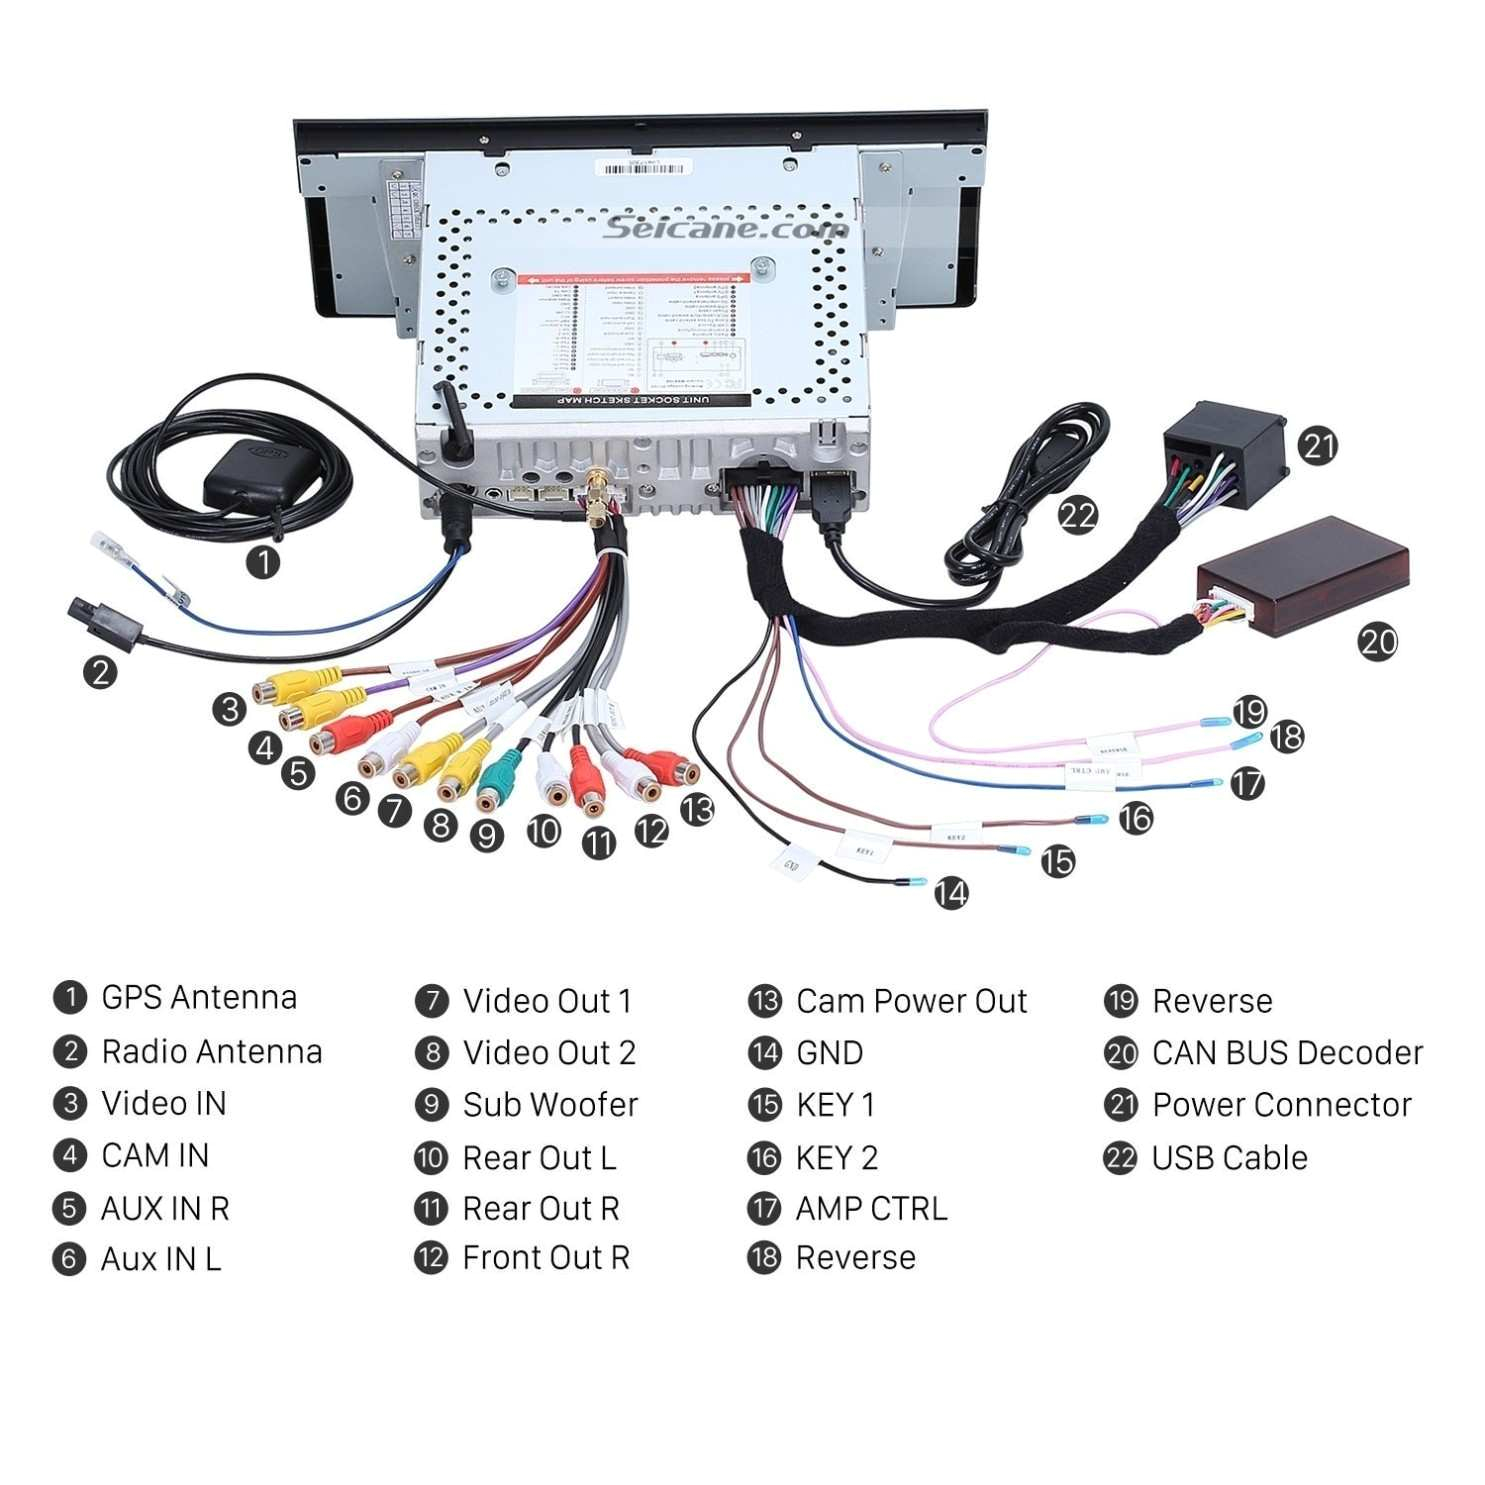 gps signal amplifier beautiful wiring diagram car amplifier fresh car radio wiring diagram http of gps signal amplifier jpg